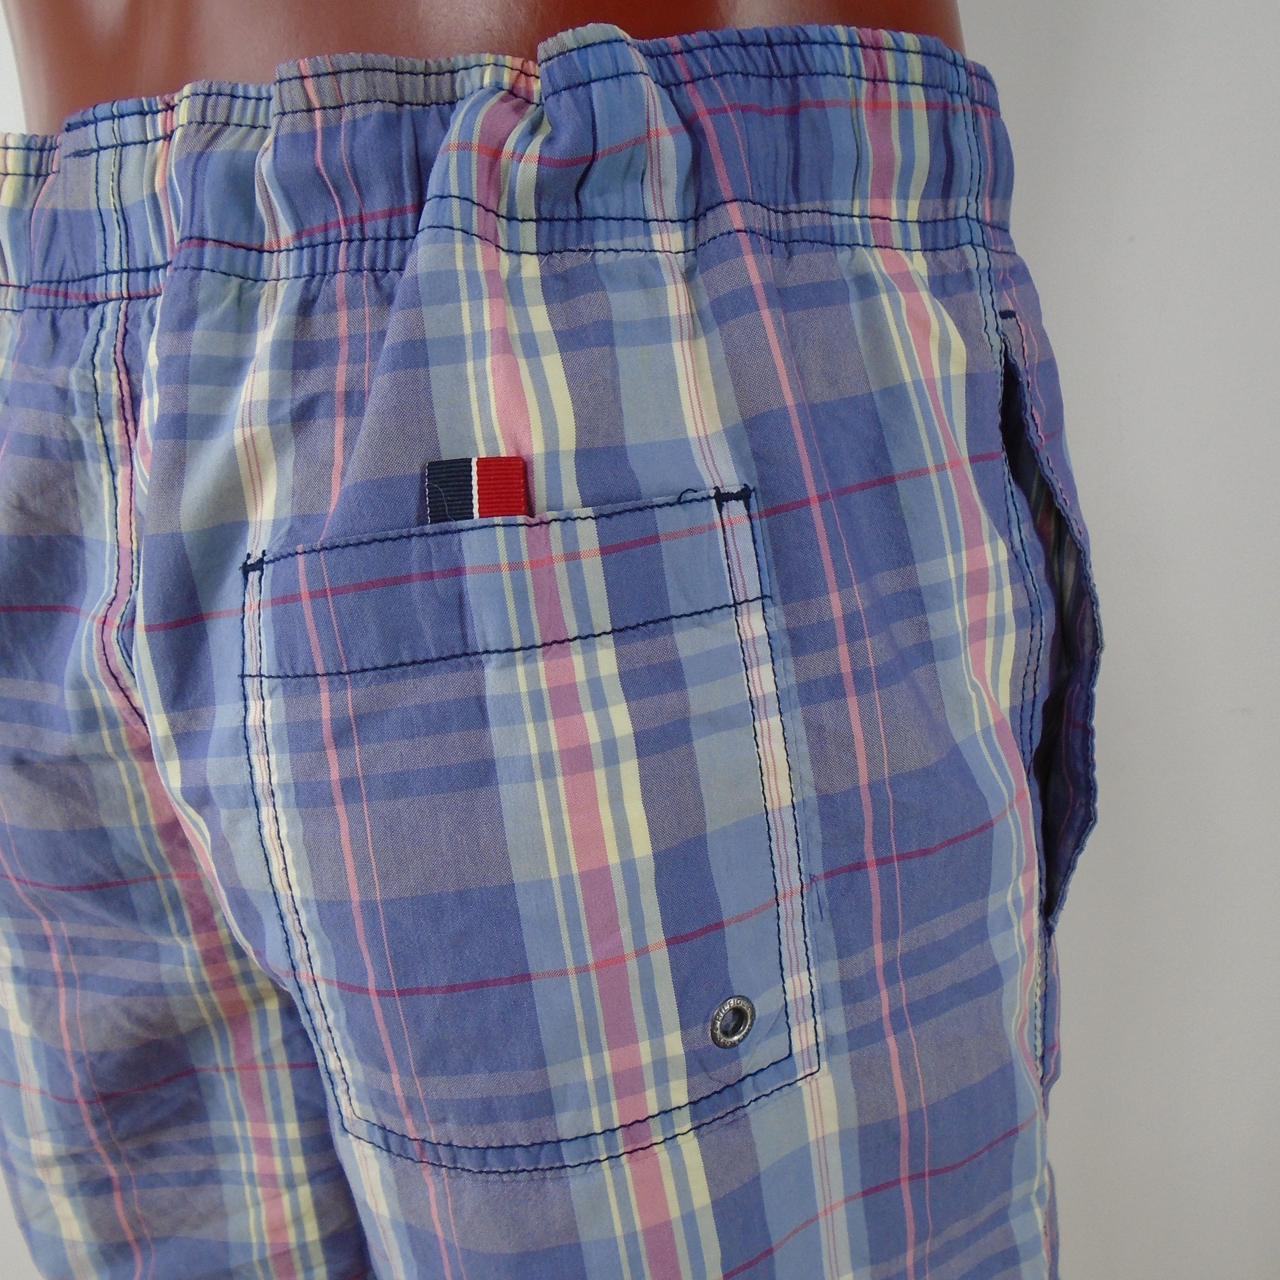 Men's Shorts Tommy Hilfiger. Dark blue. M. Used. Very good